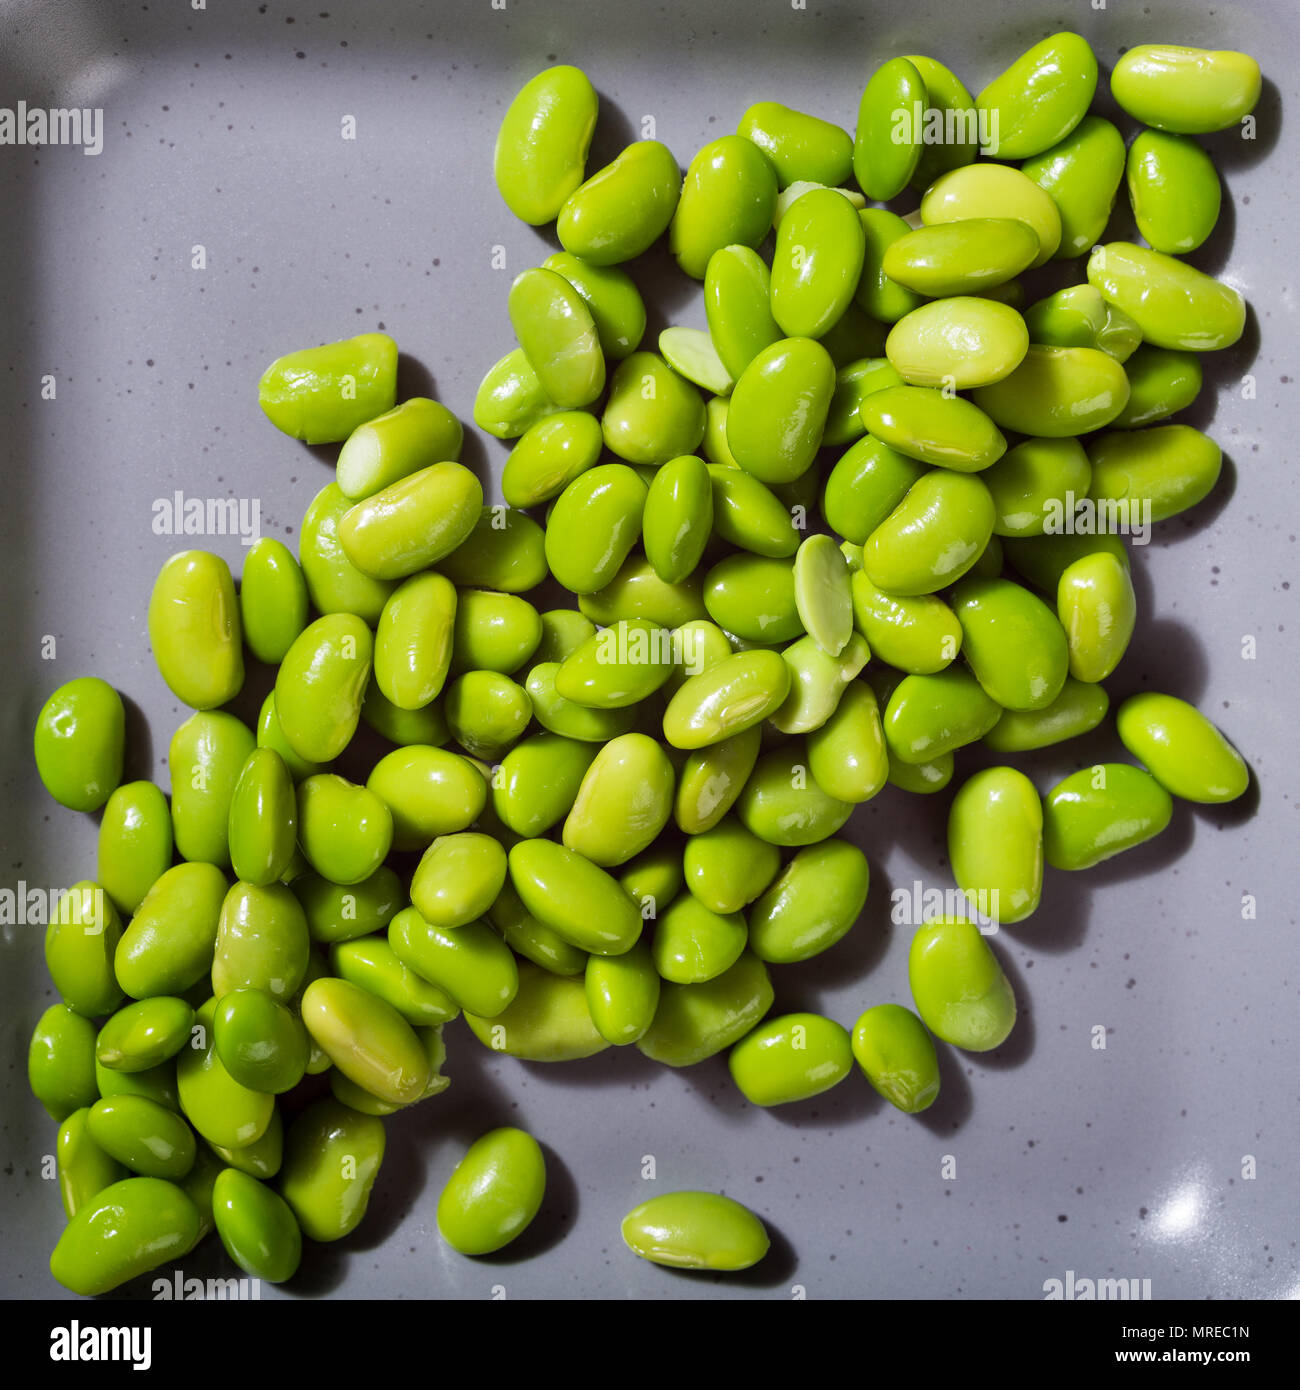 Green fresh soybeans Stock Photo